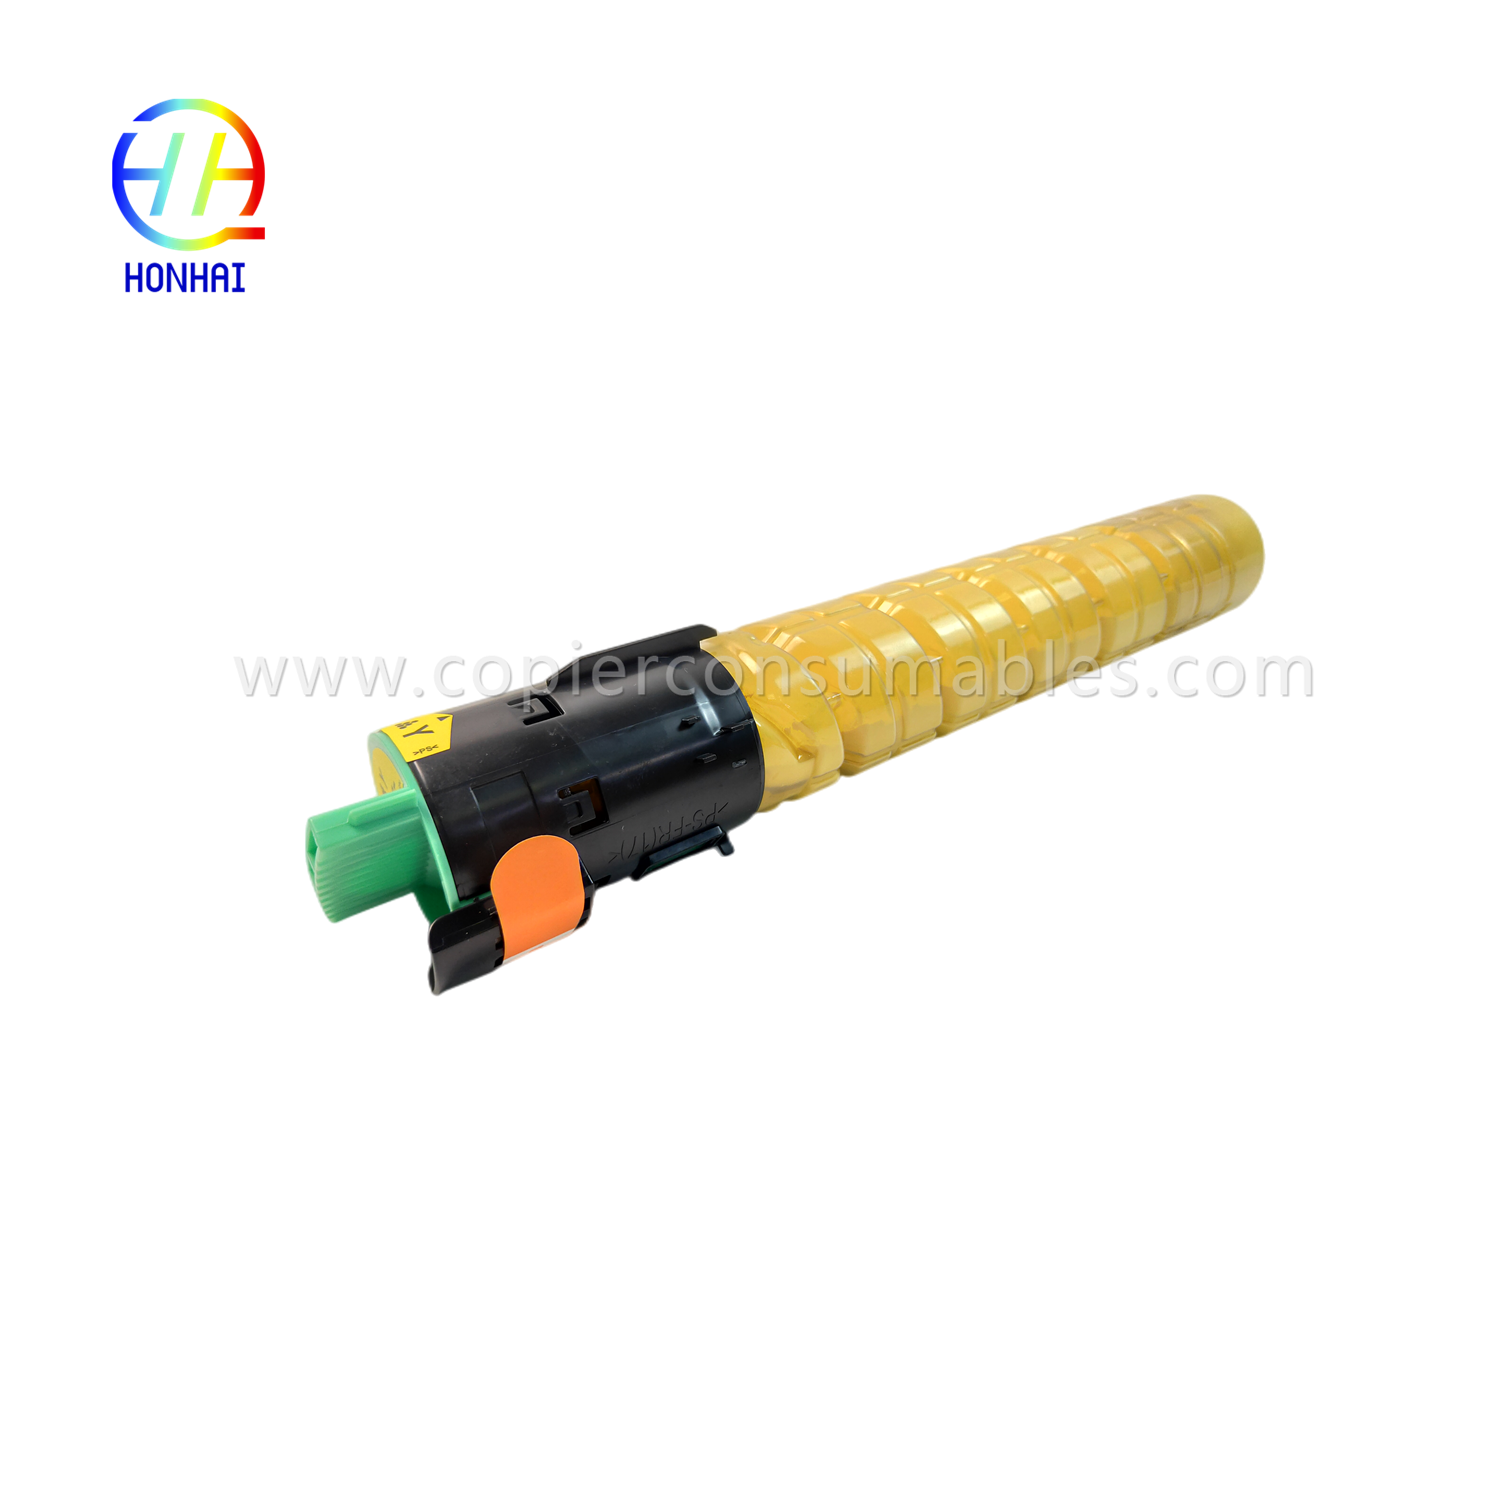 https://www.copierconsumables.com/toner-cartridge-yellow-for-ricoh-avicio-mpc2051-mpc2551-841501-product/